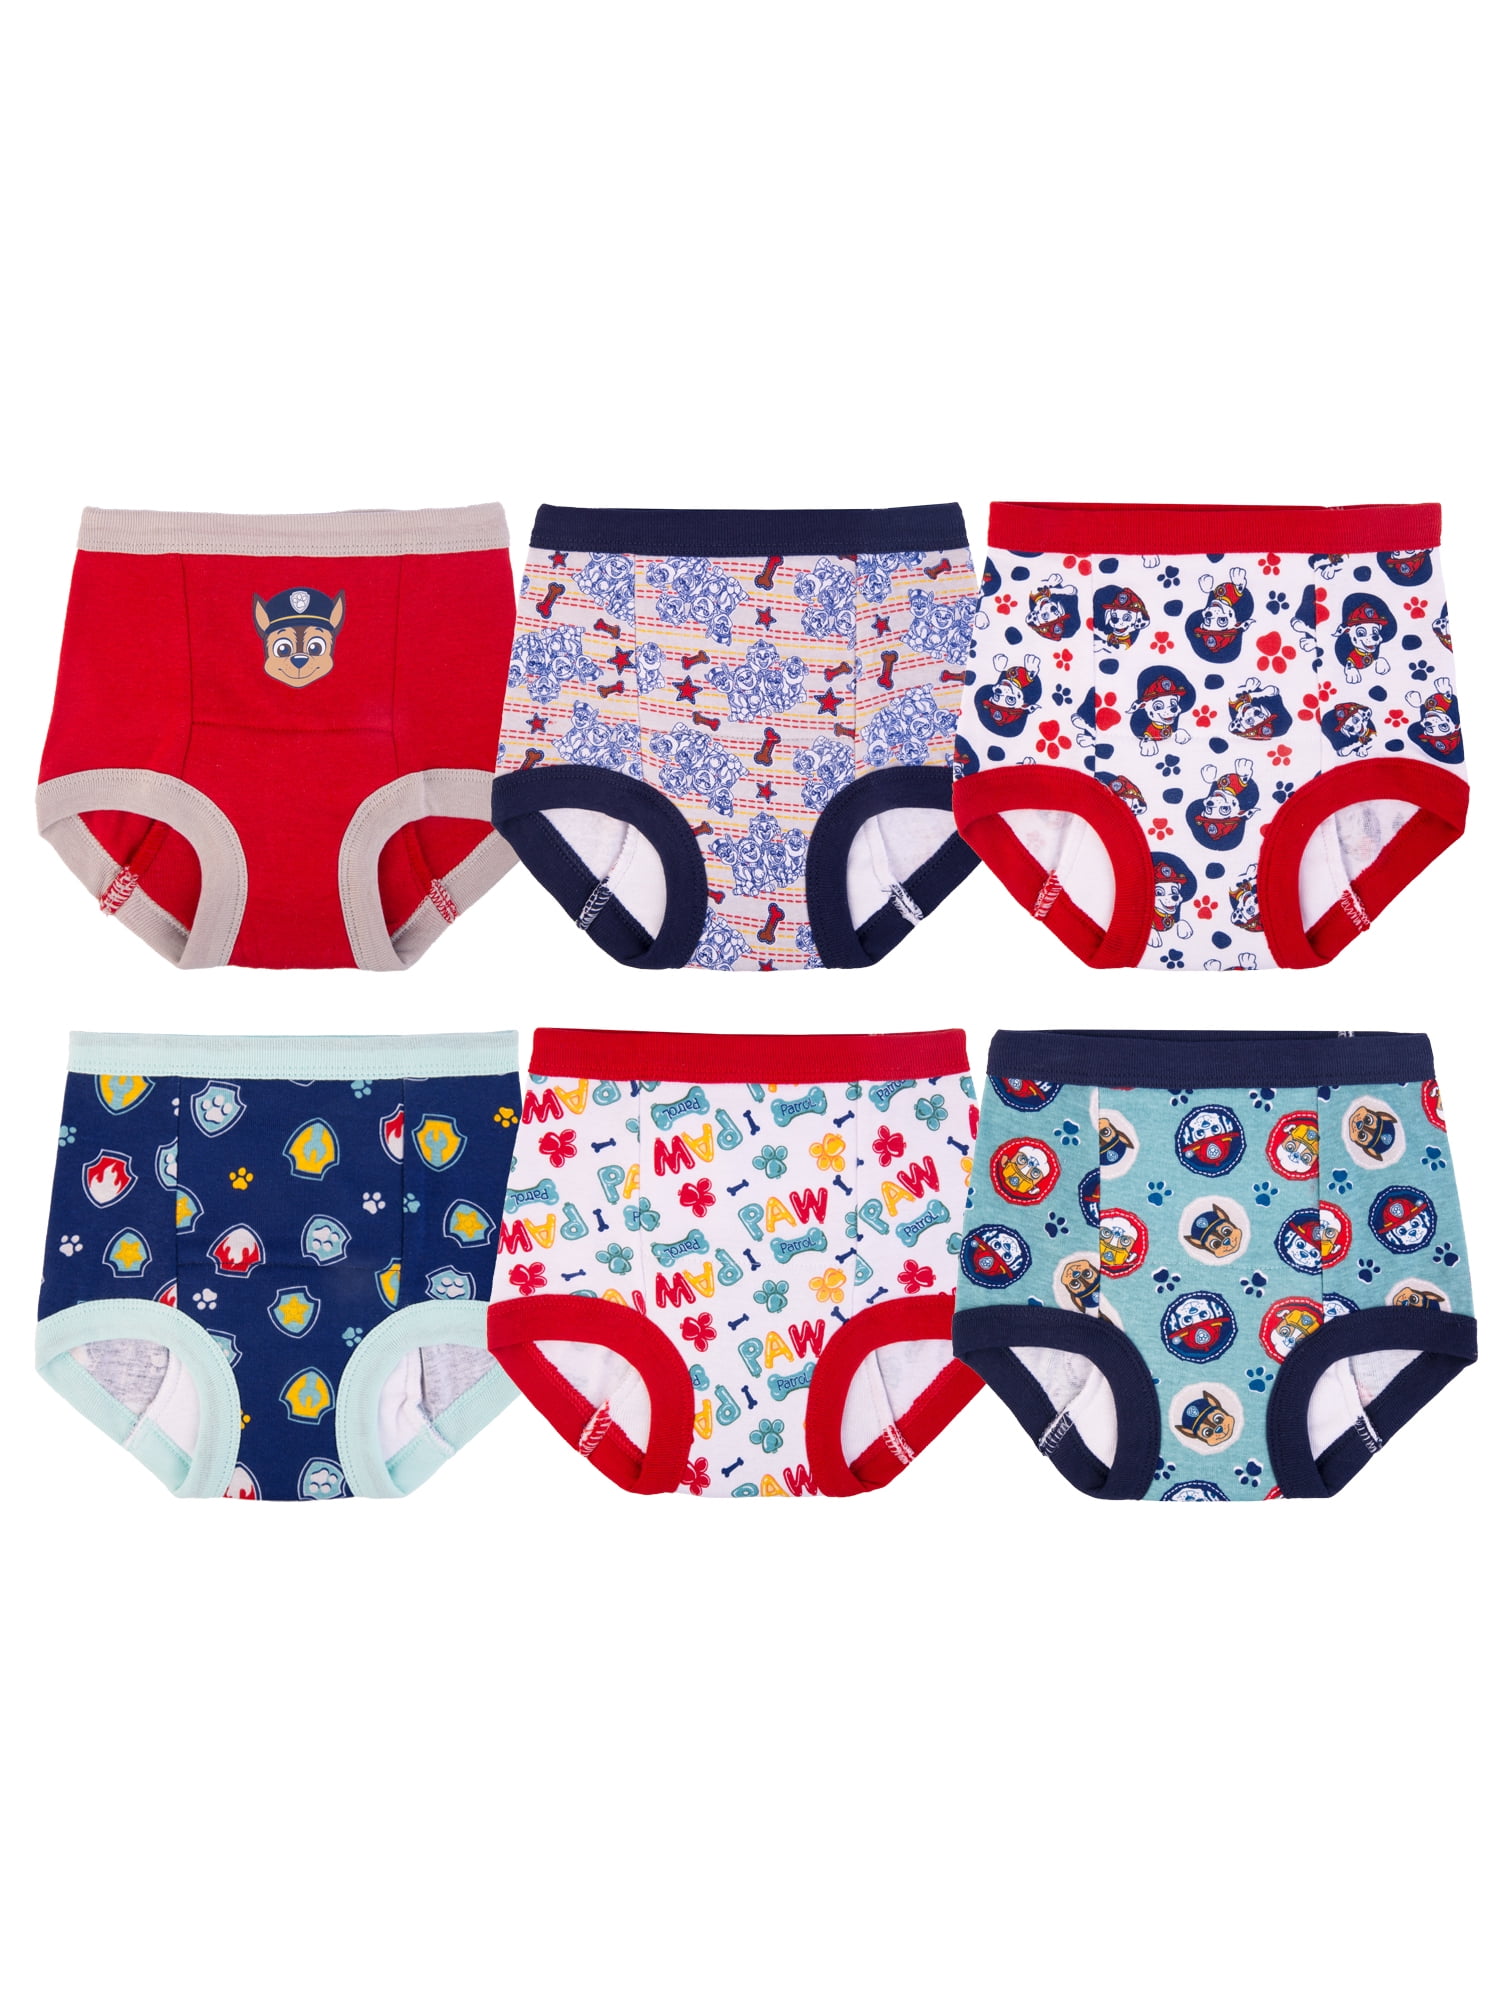 12 Pack PAW PATROL Toddler Boys Size 5T Training Pants, Underwear Potty  Training